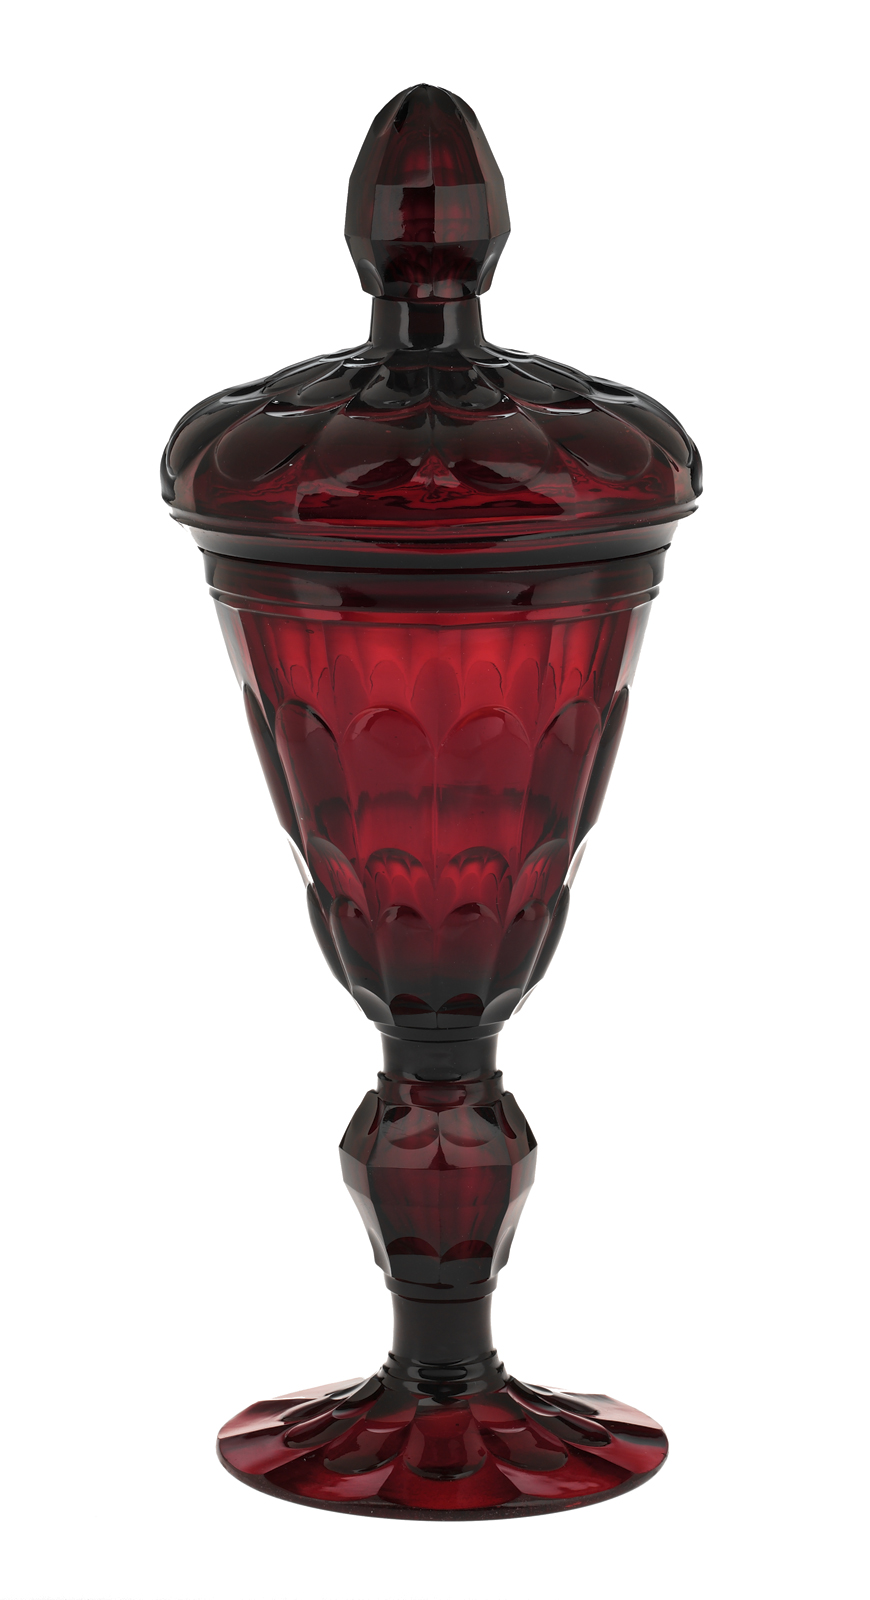 Ruby Red Crystal Gold Trimmed Wine Glasses Goblets Red Glassware Set of 4 